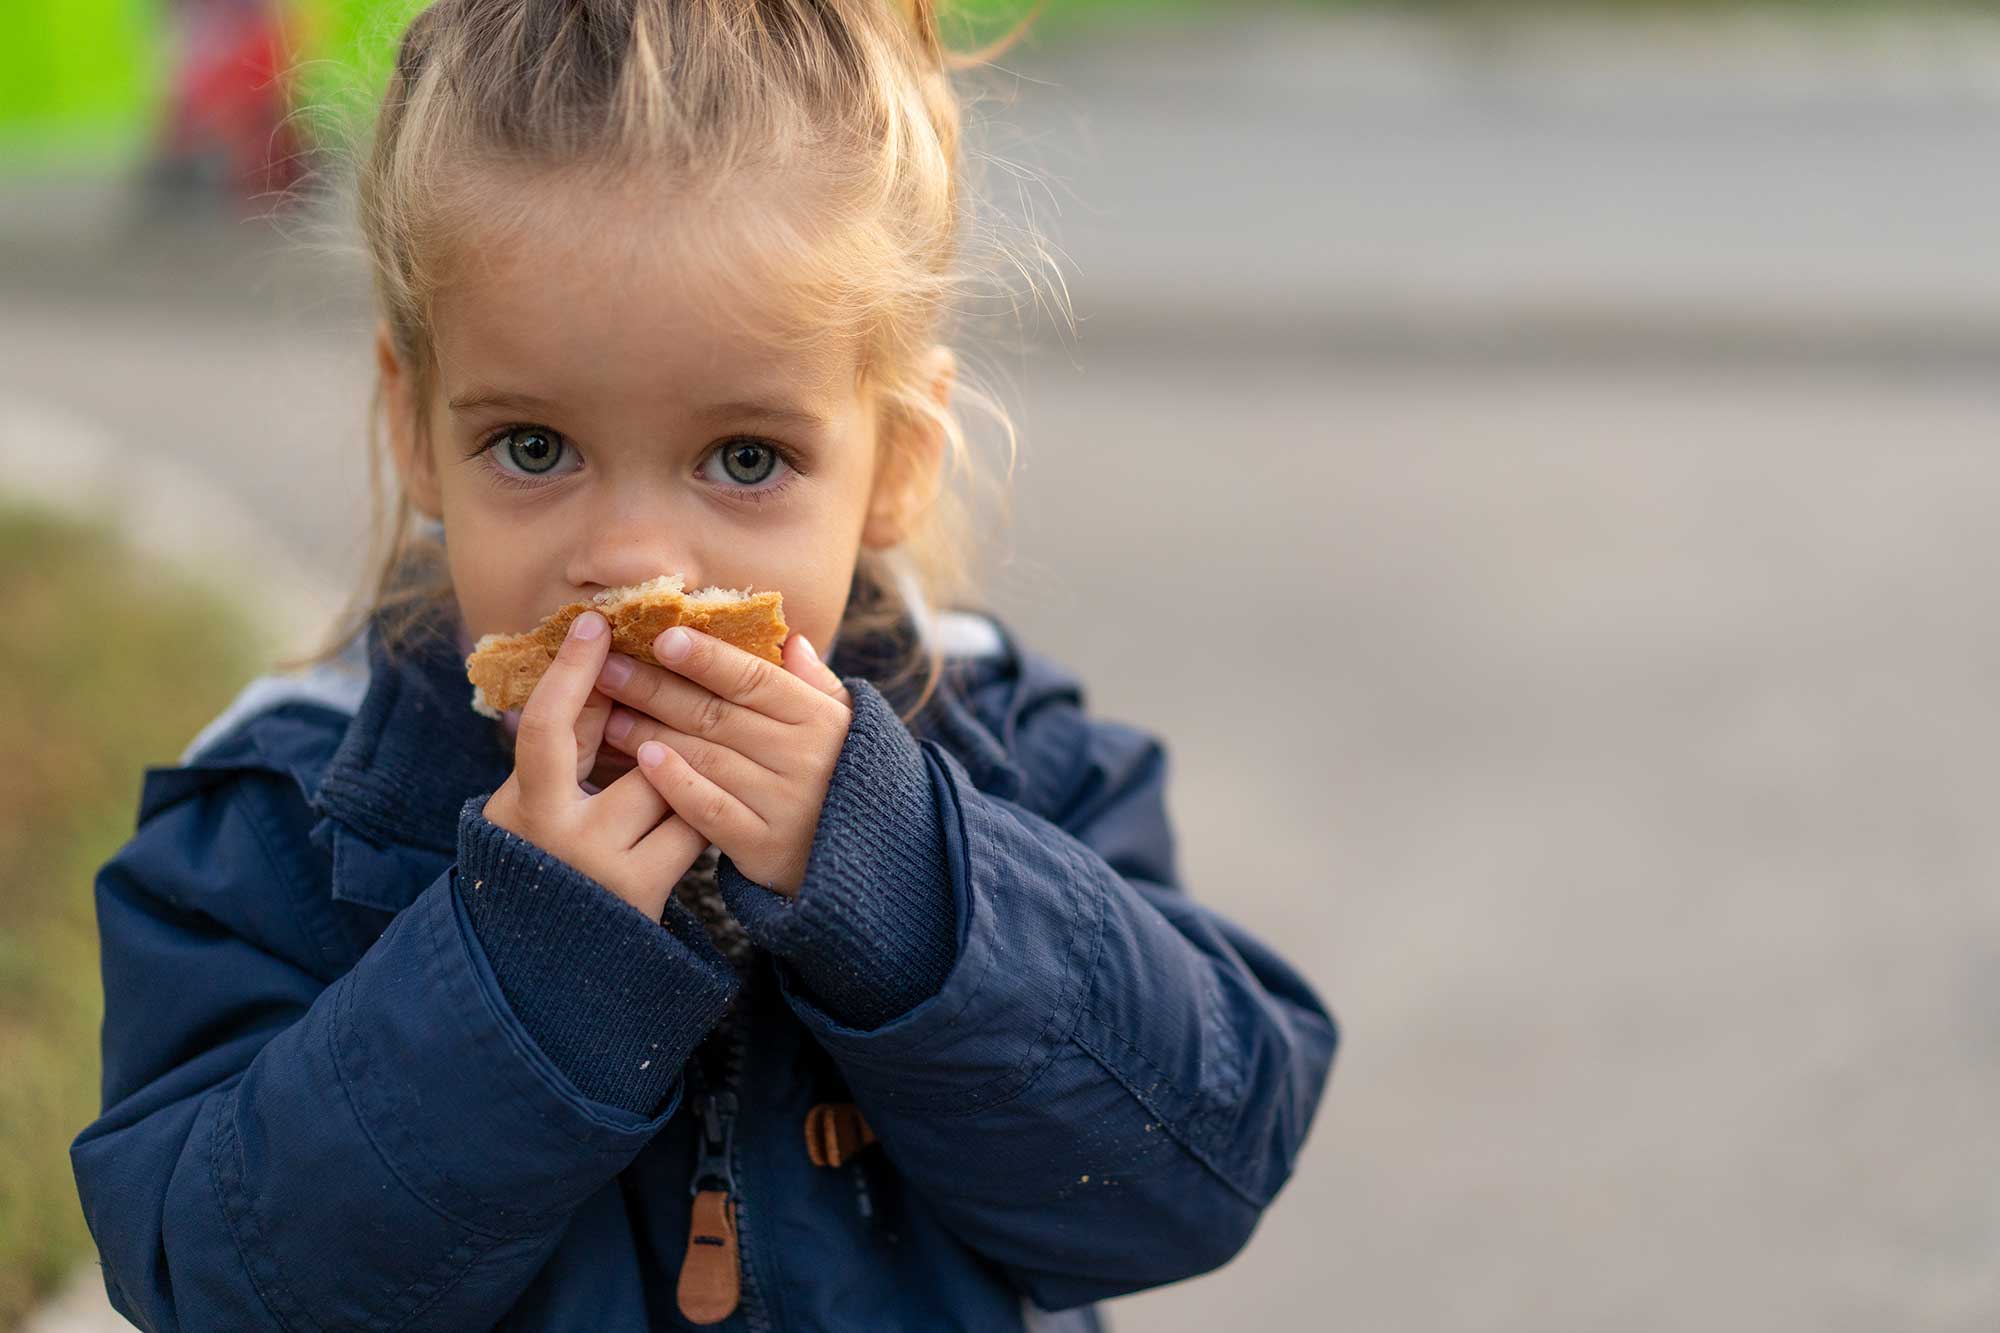 A girl eats a snack